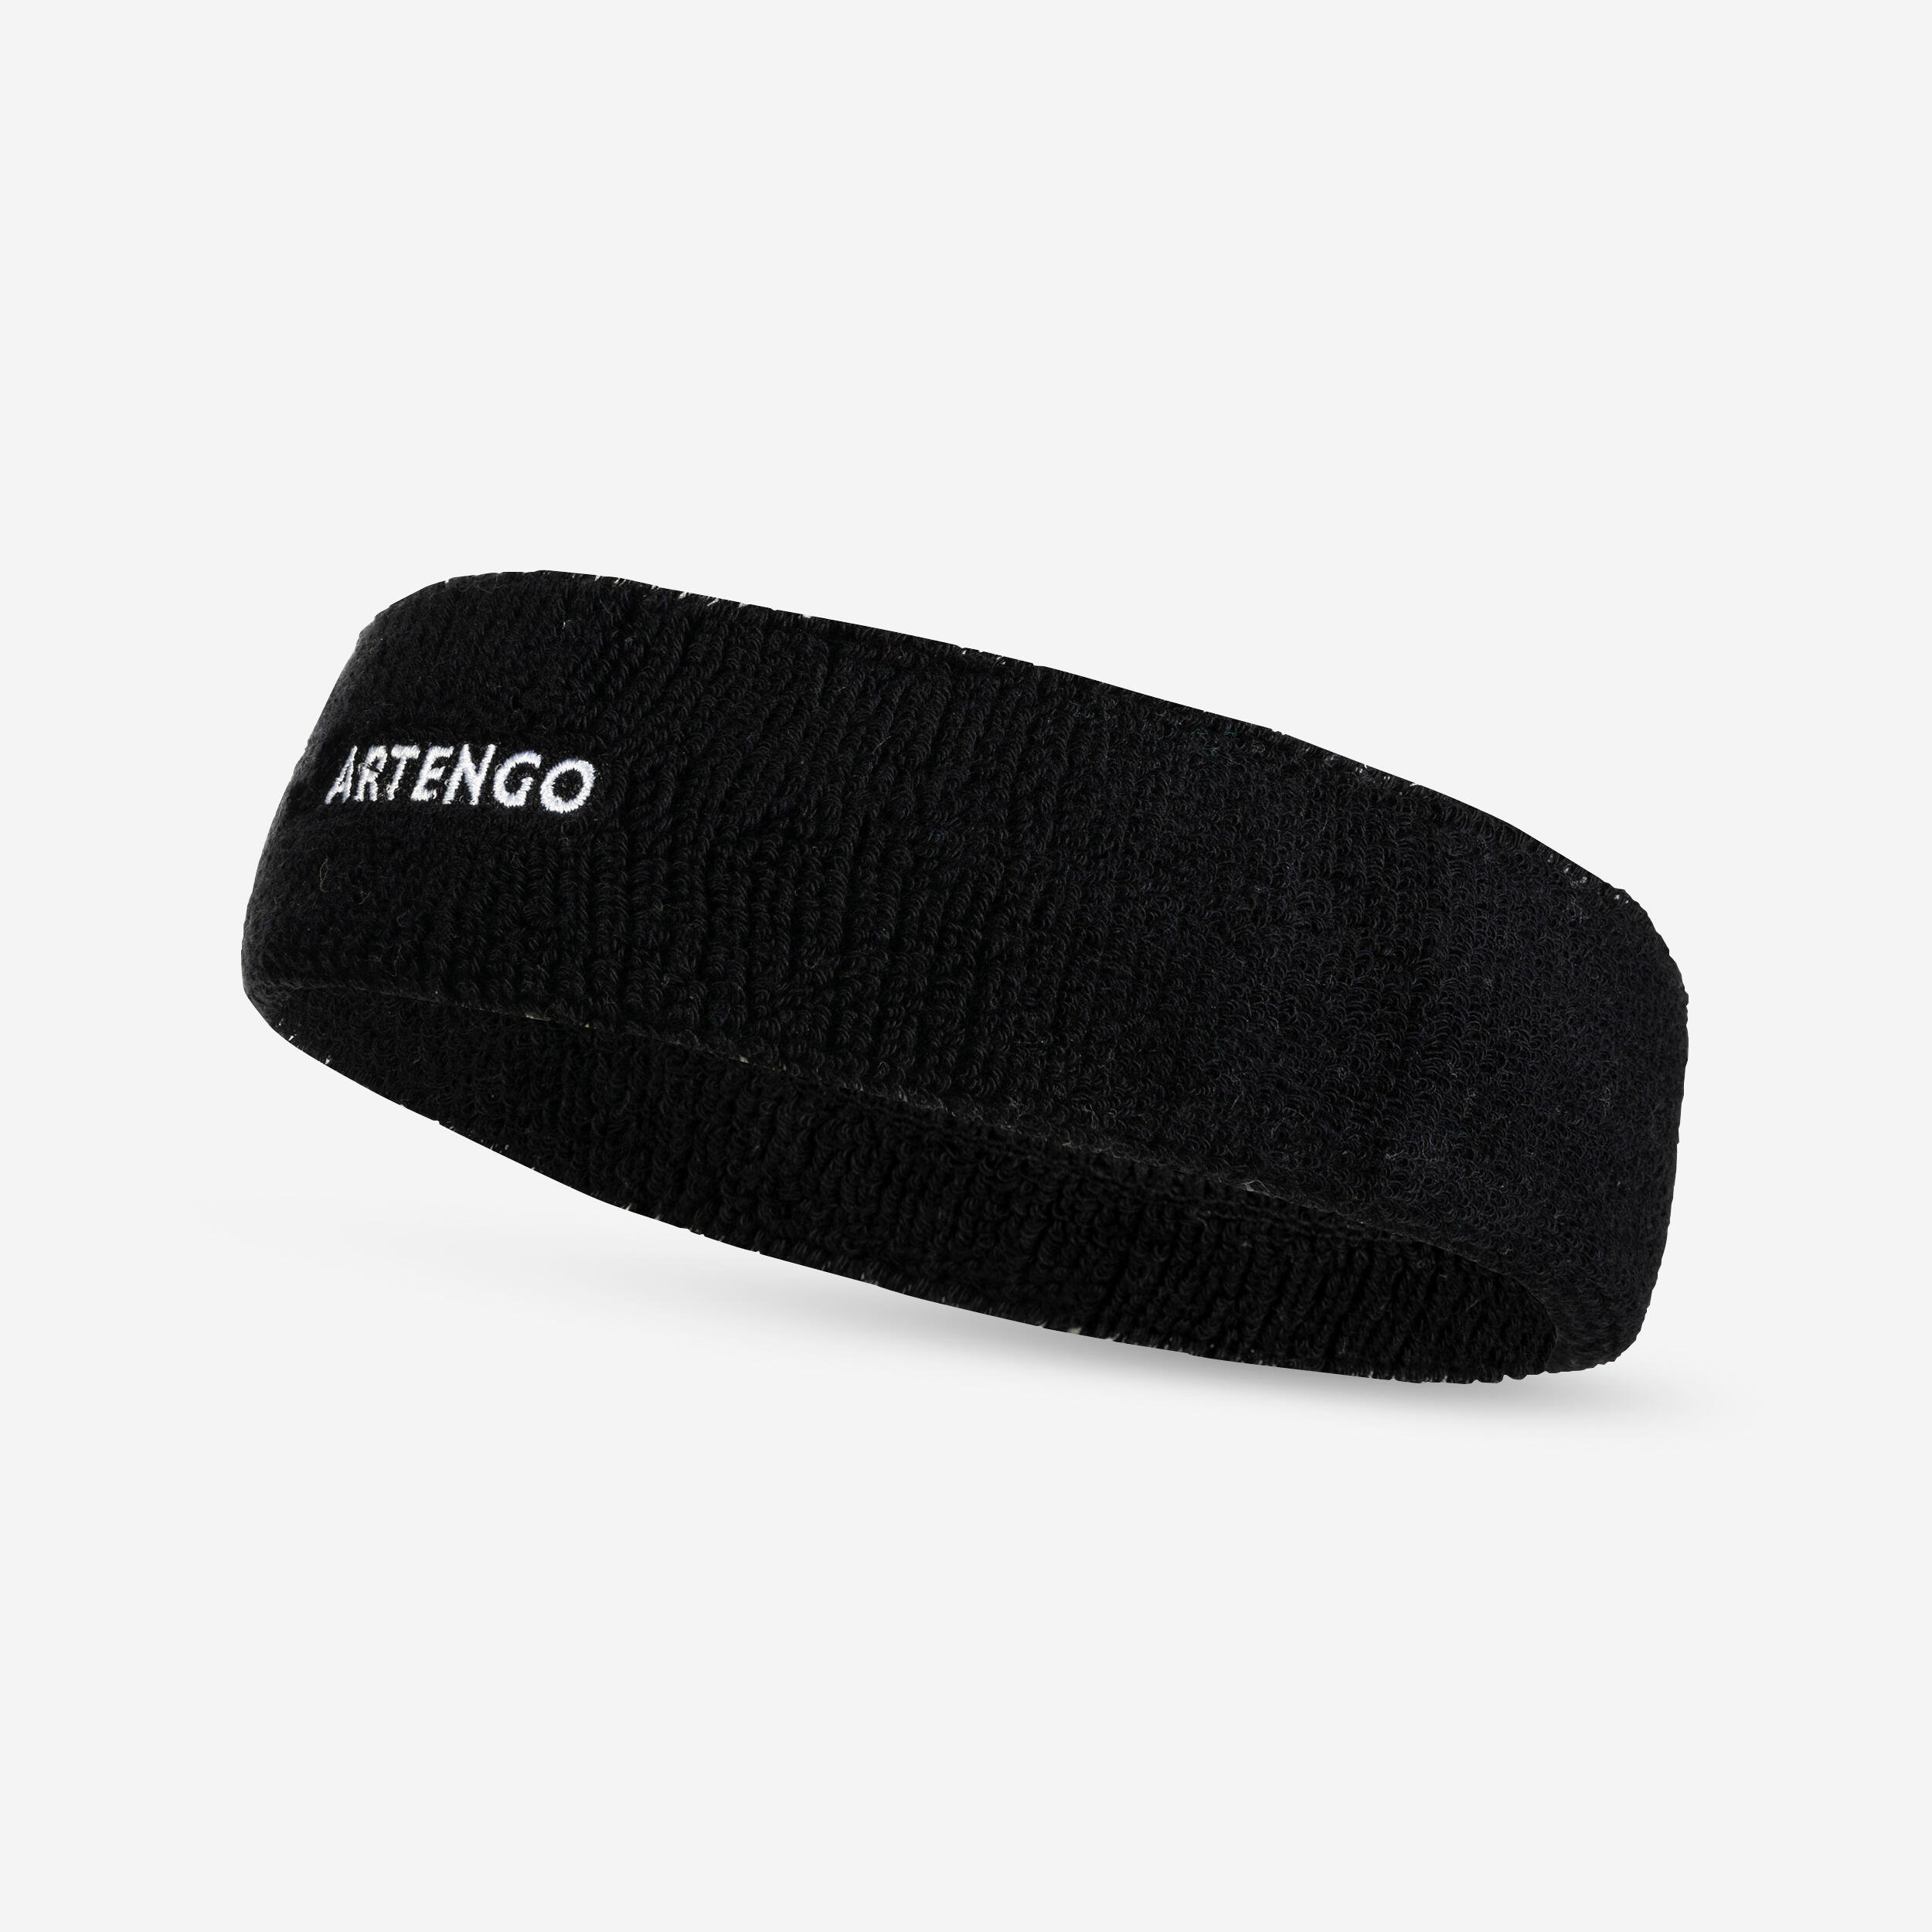 ARTENGO TB 100 Tennis Headband - Black